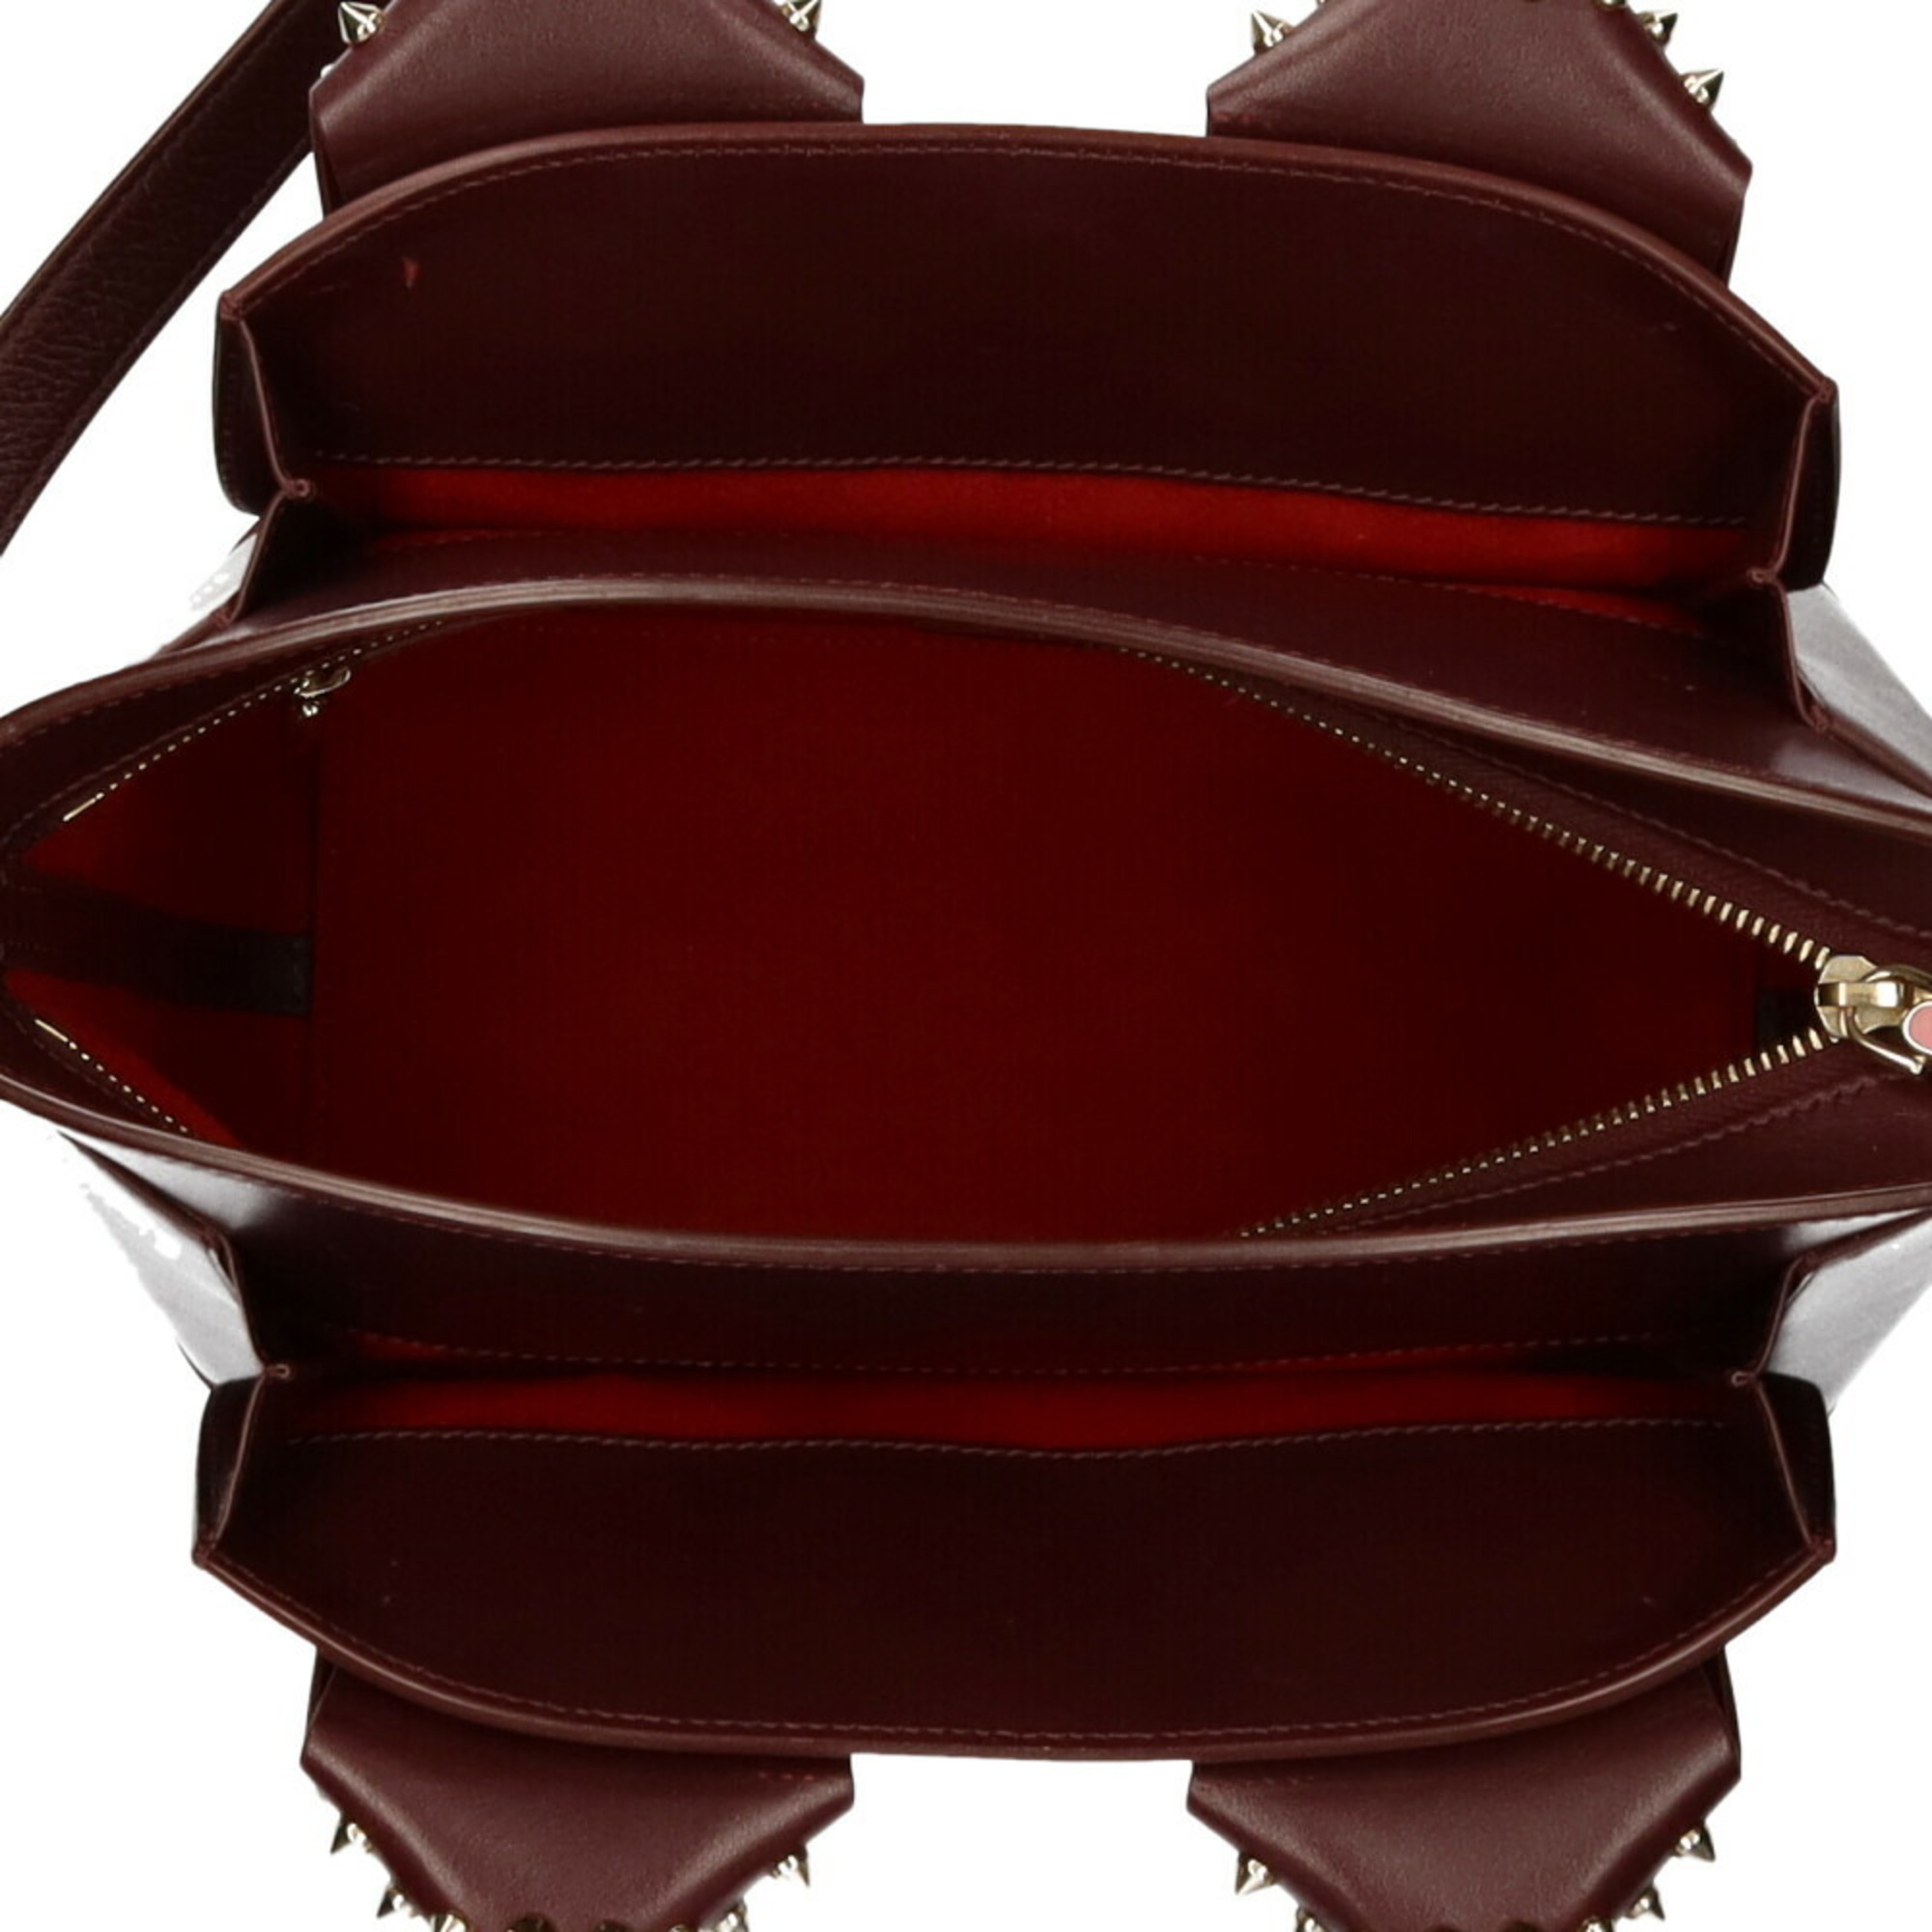 Christian Louboutin Small Studs Eloise Shoulder Bag Leather Bordeaux Women's